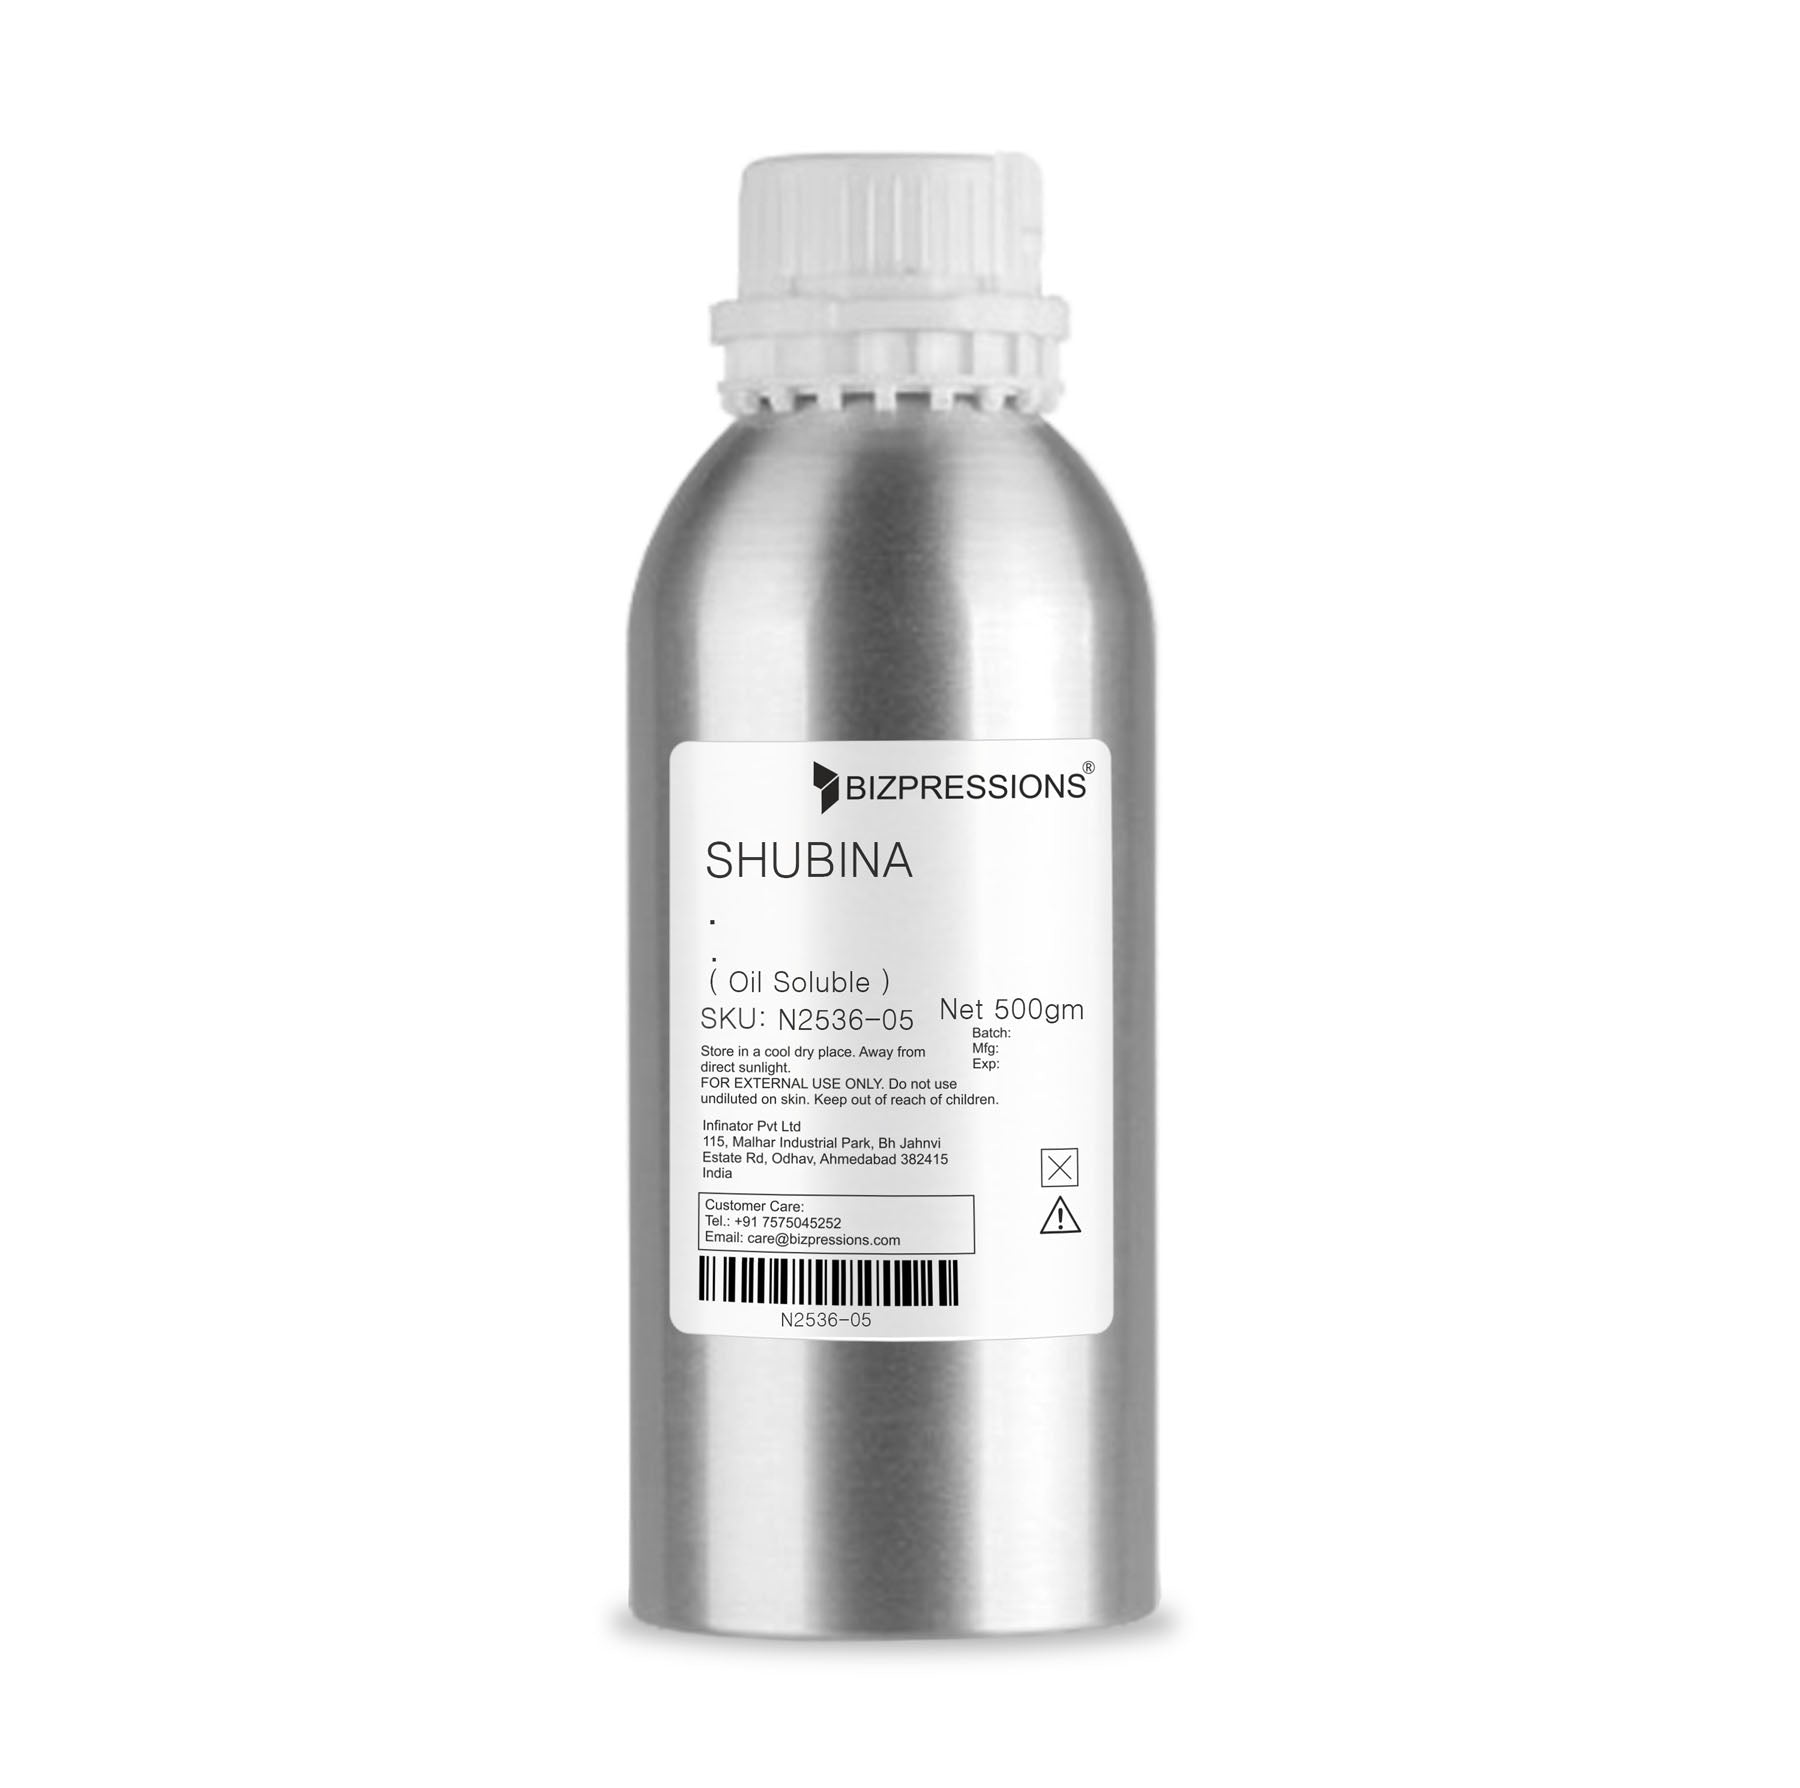 SHUBINA - Fragrance ( Oil Soluble ) - 500 gm